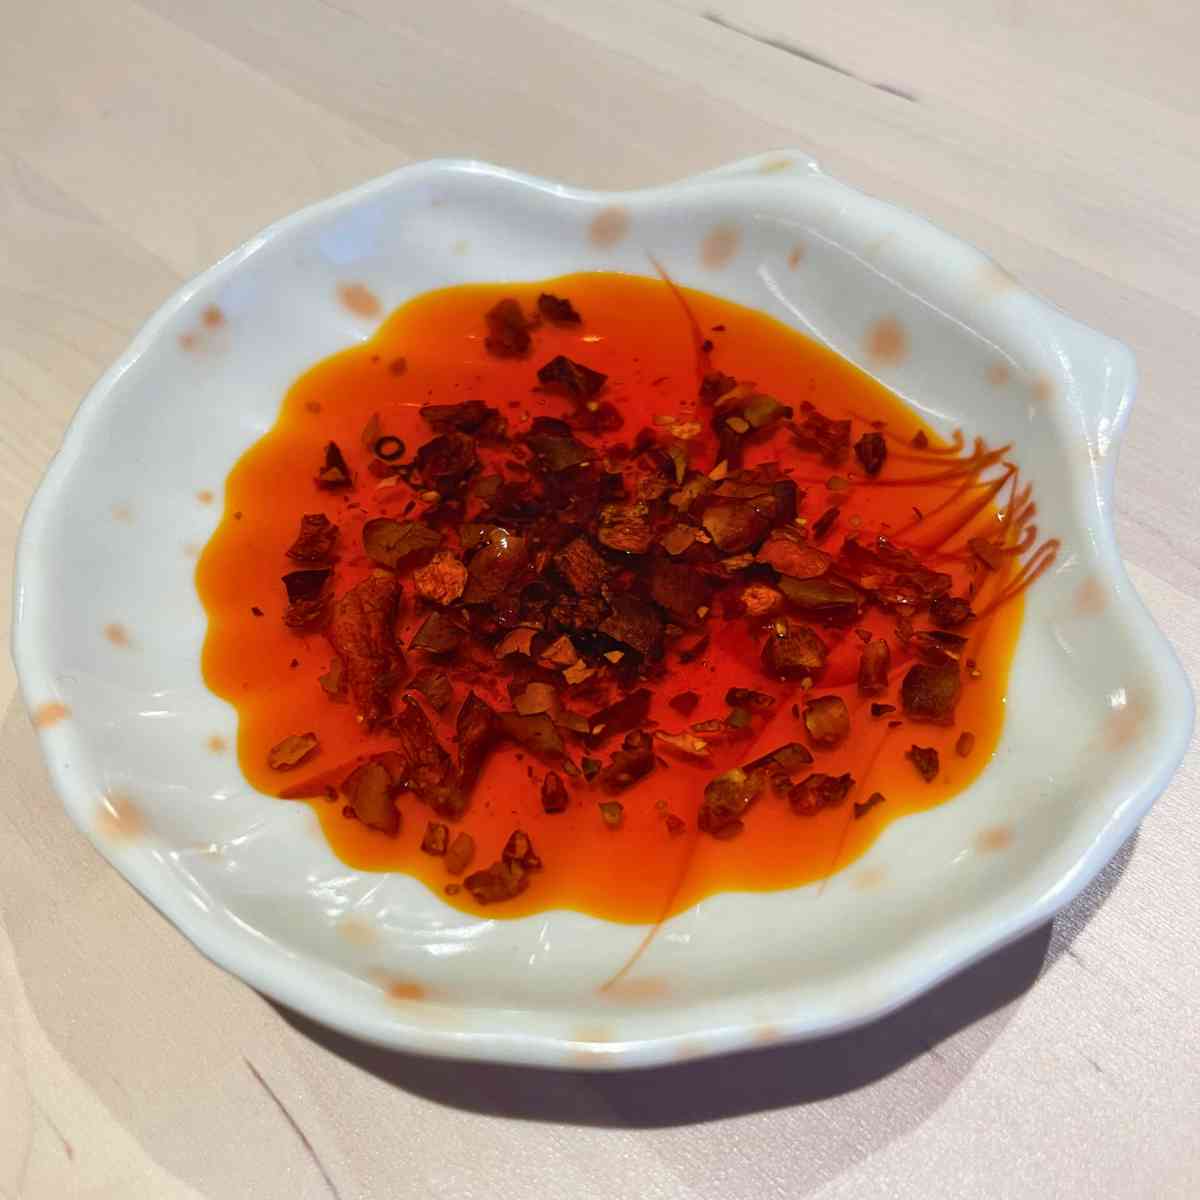 Chilli oil in a plate